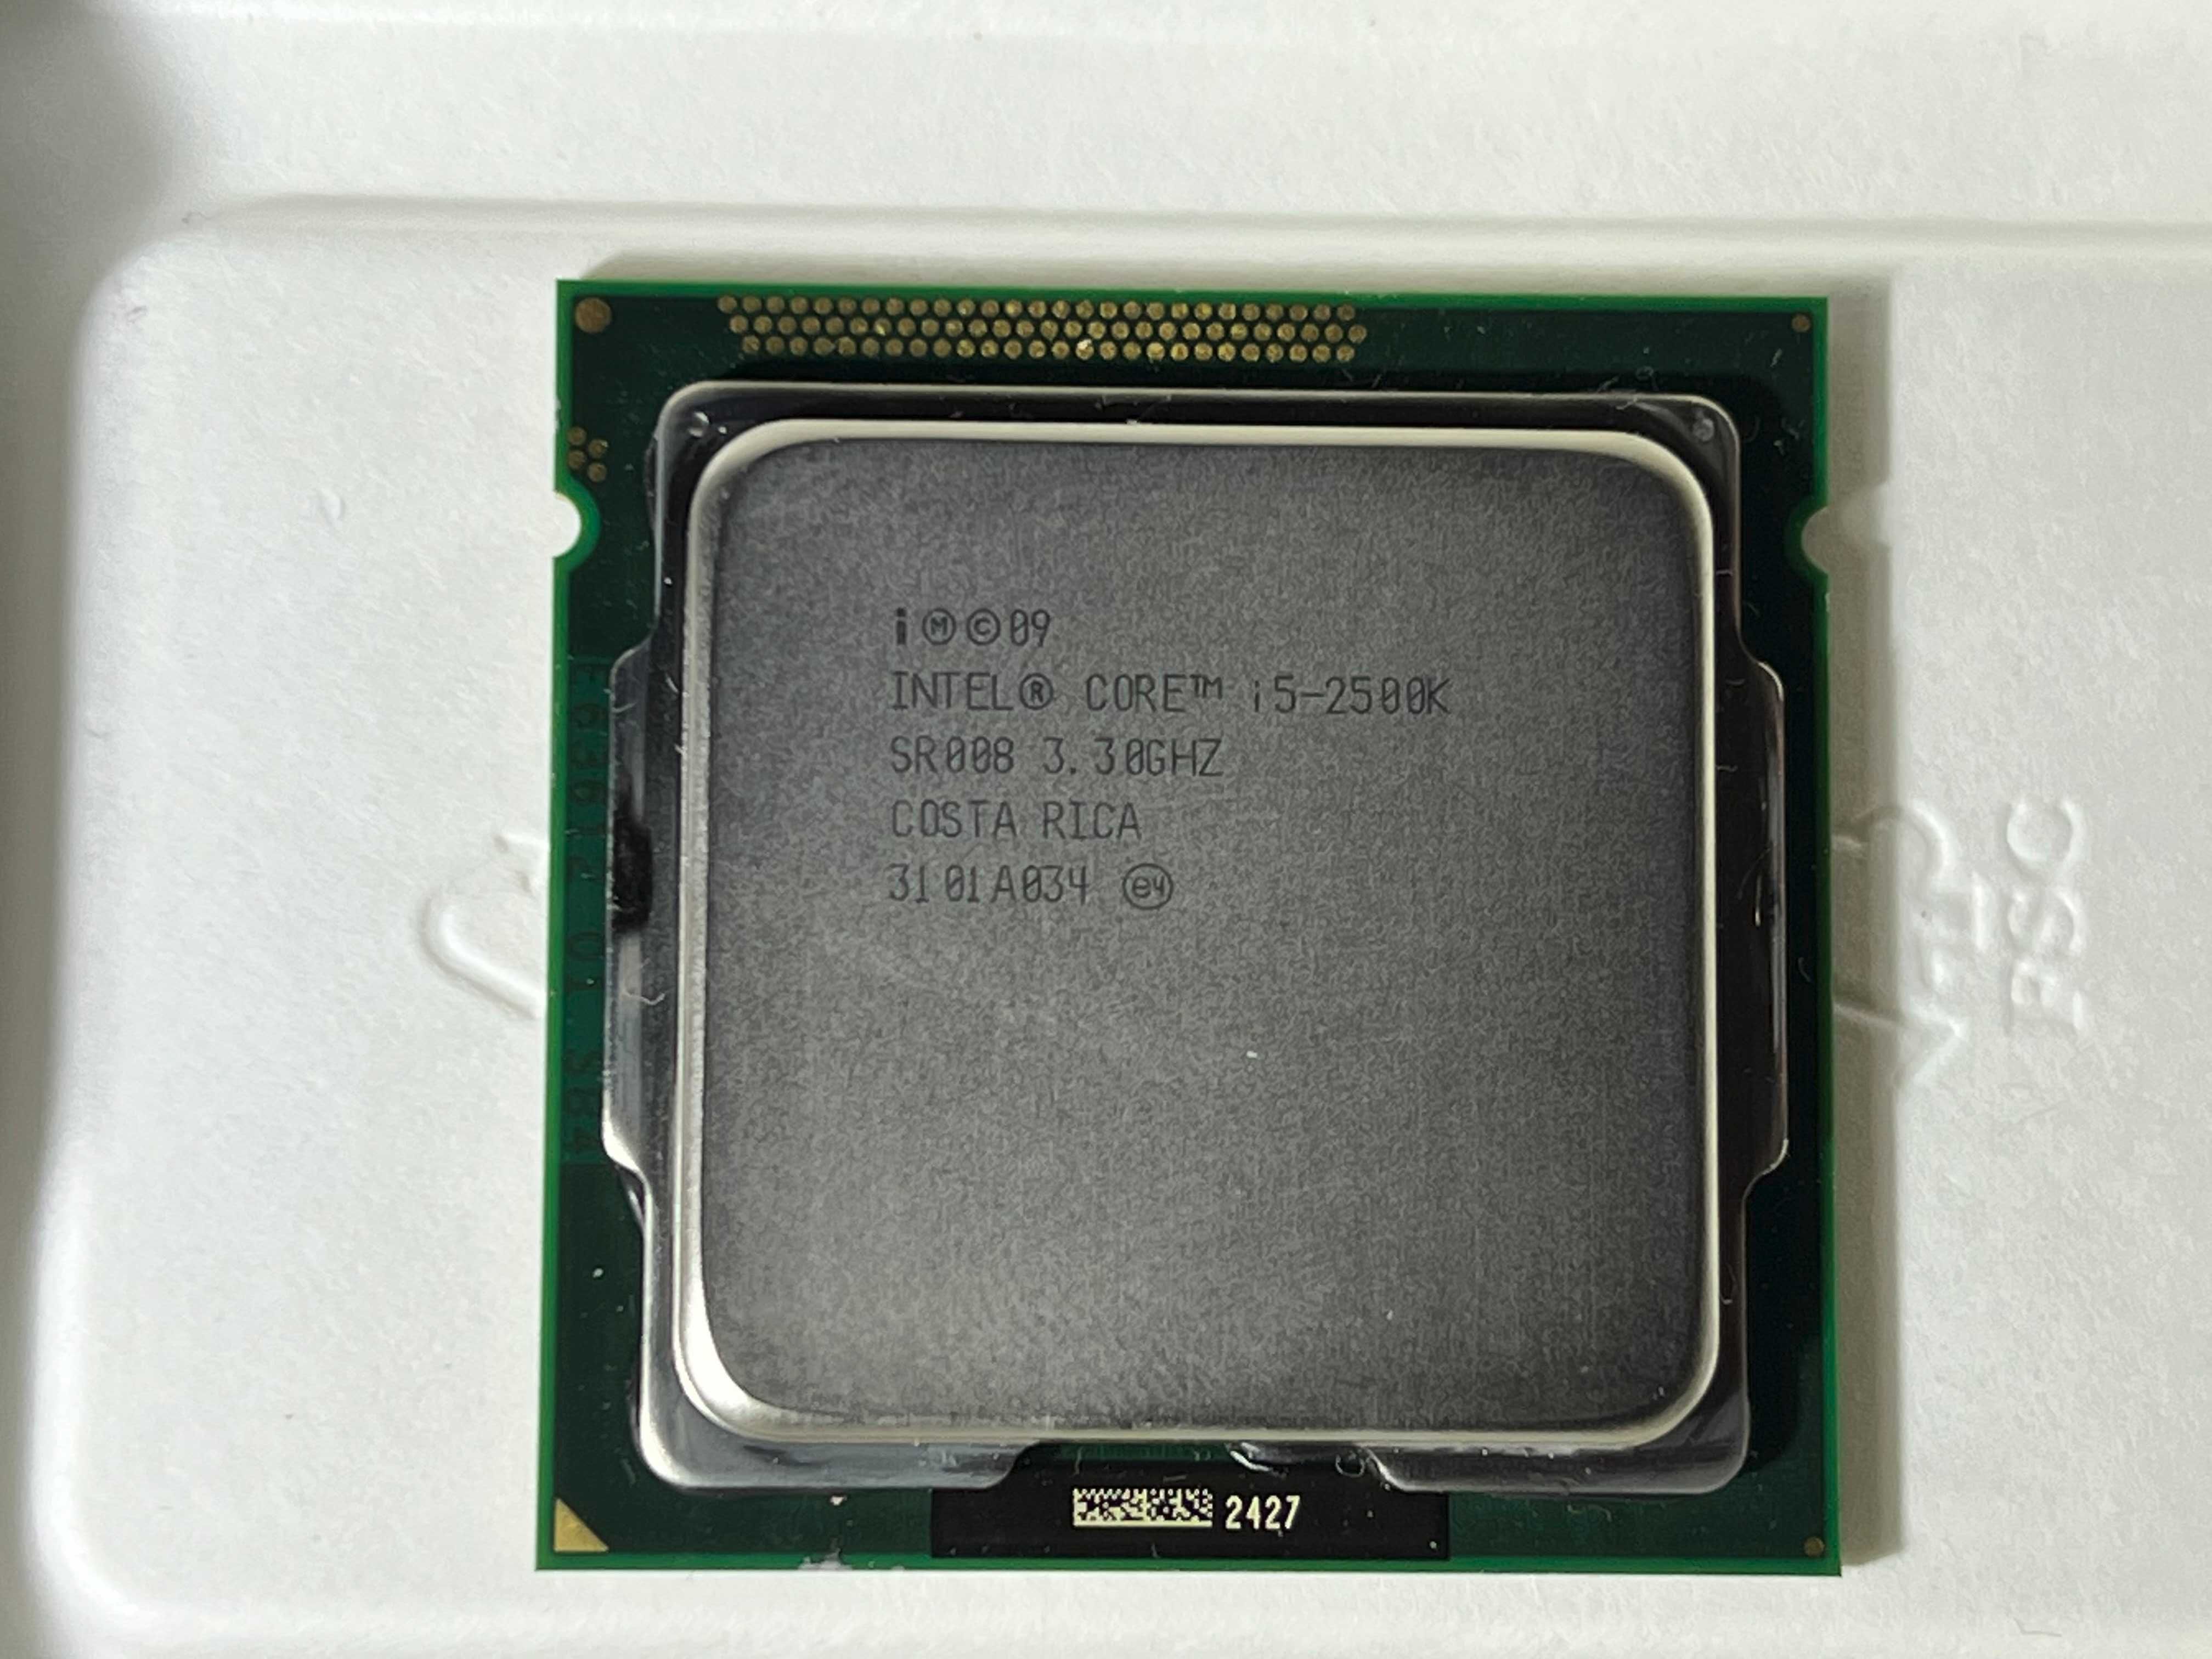 Procesor Intel i5 2500K